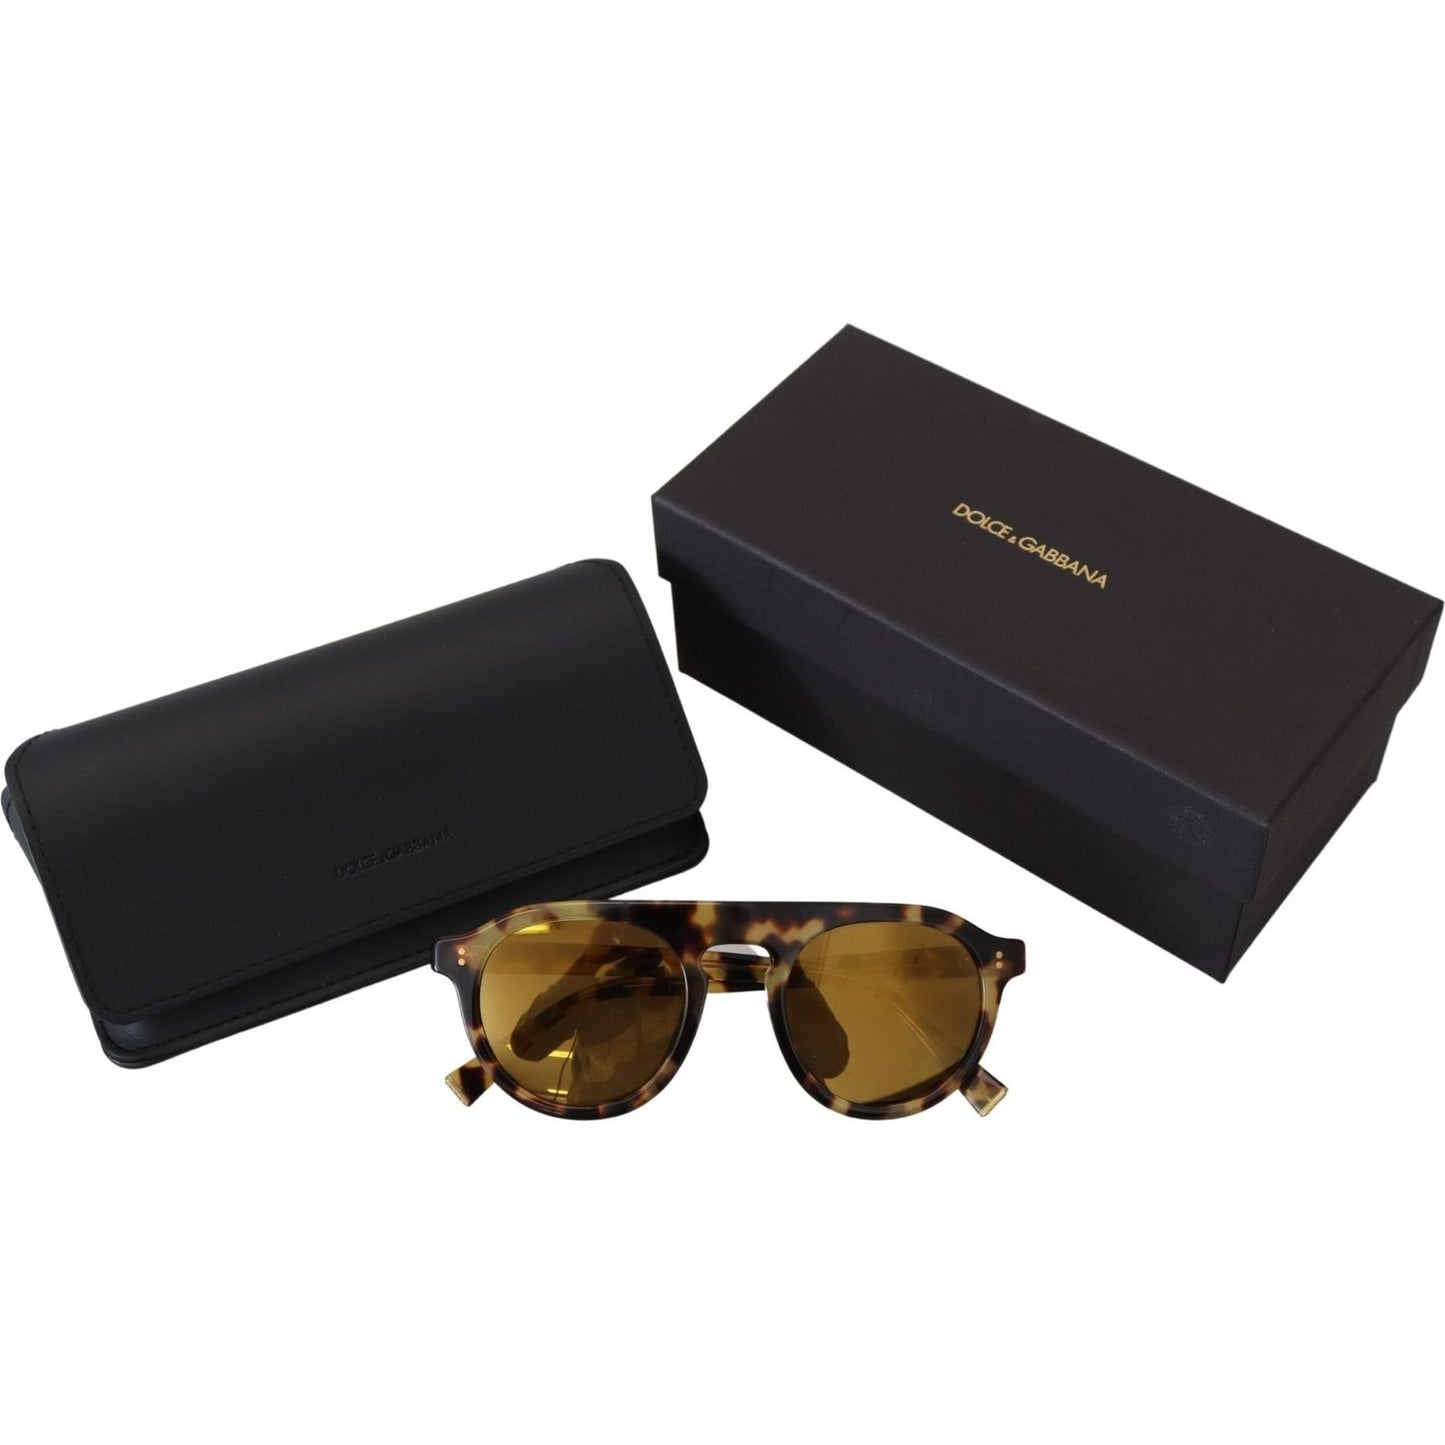 Dolce & Gabbana Chic Tortoiseshell Acetate Sunglasses brown-tortoise-oval-full-rim-shades-dg4306f-sunglasses